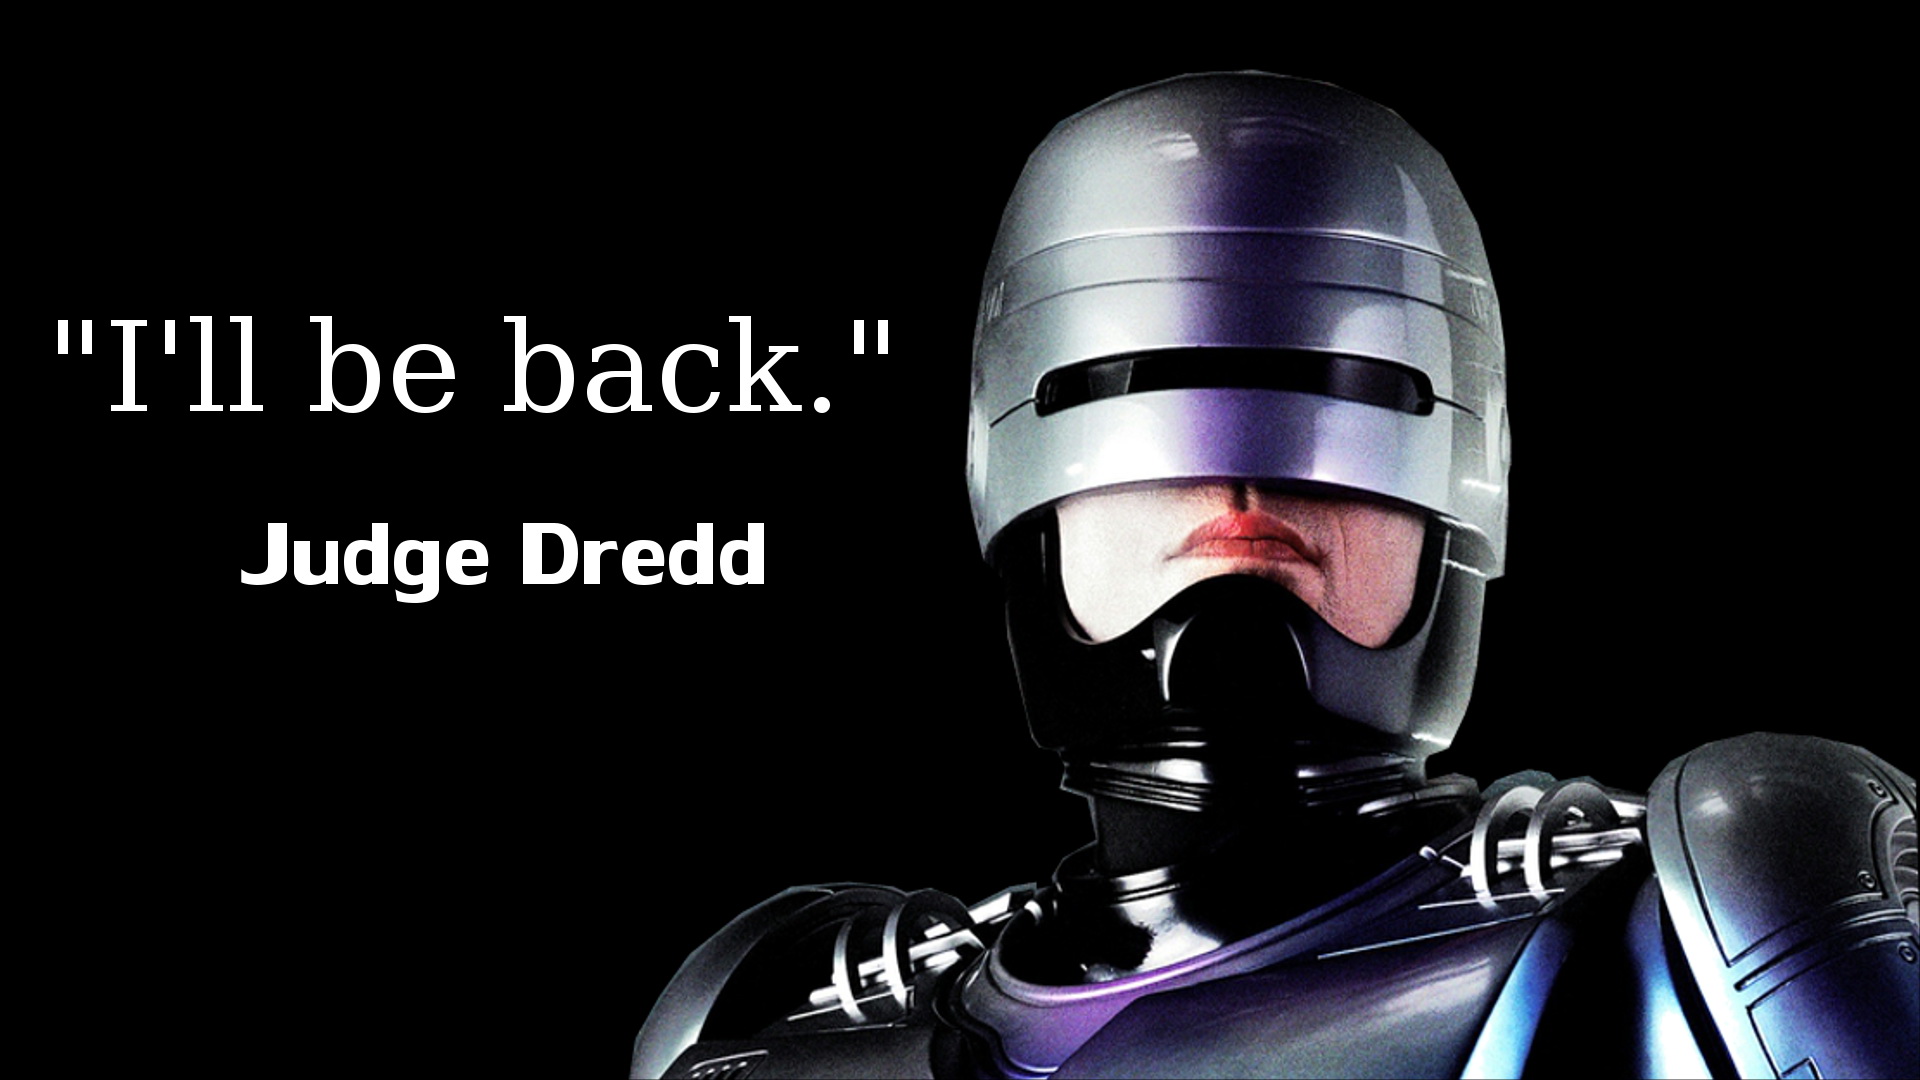 I'll be back - Judge Dredd